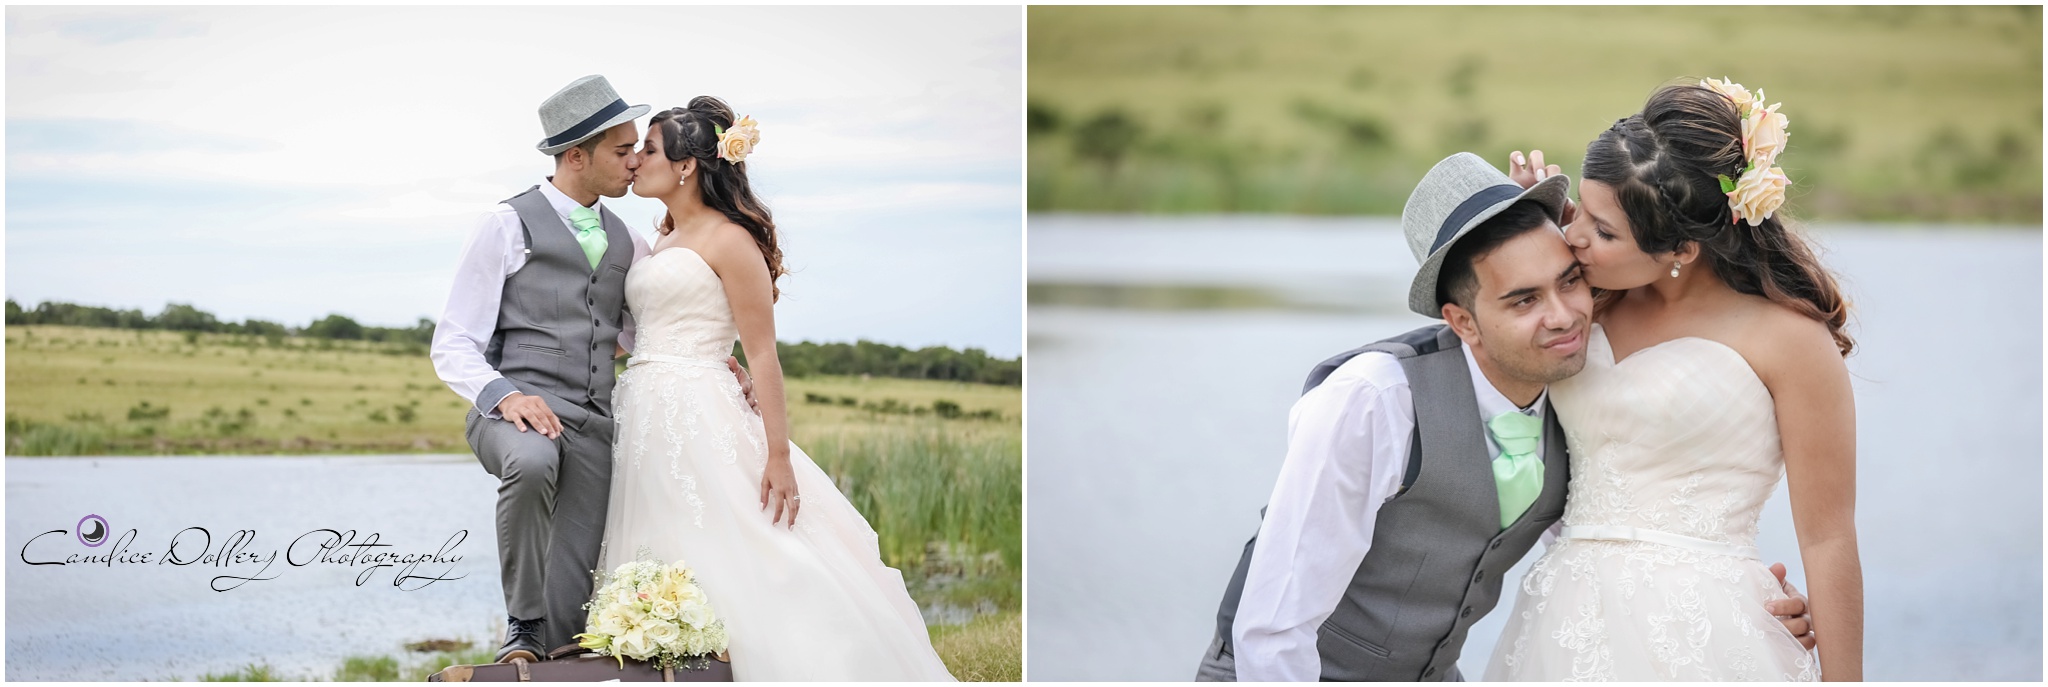 Paula & Jaycee's Wedding - Cypress Dale - Candice Dollery Photography_3095